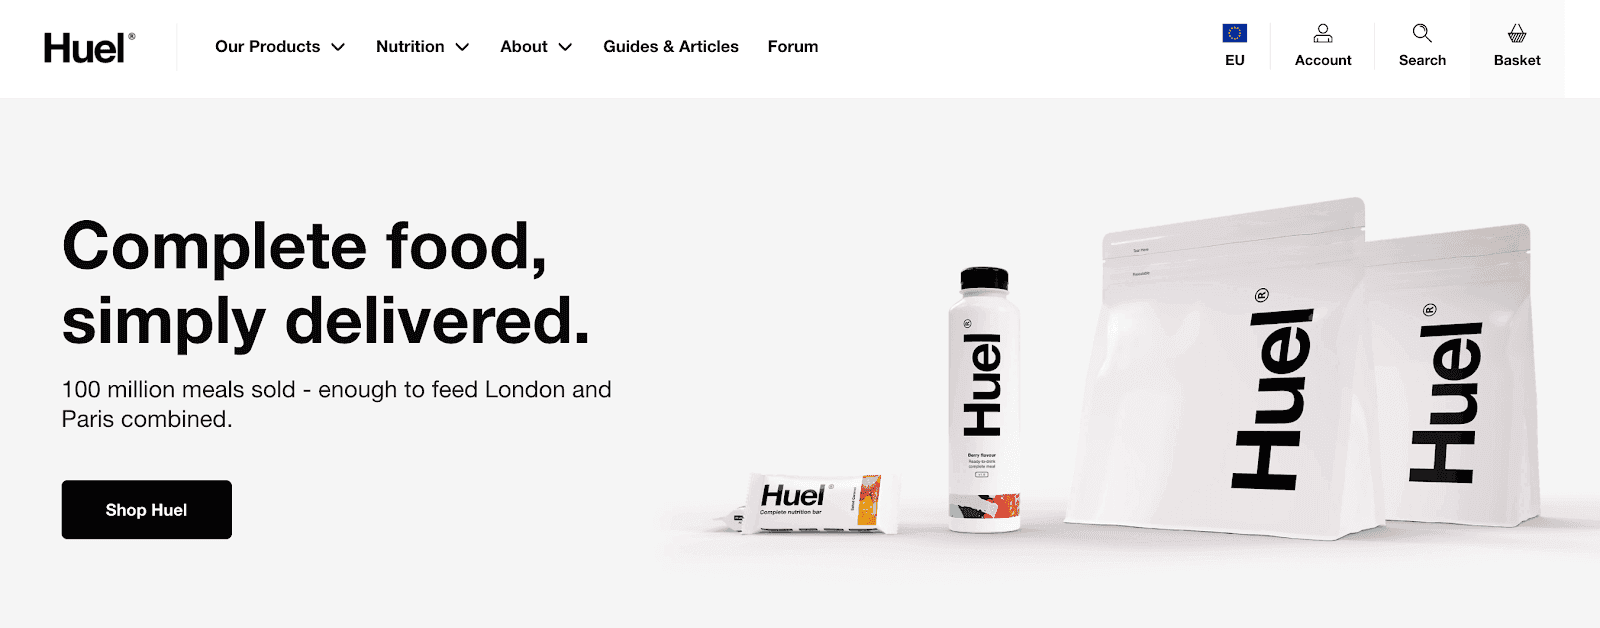 Website homepage for Huel